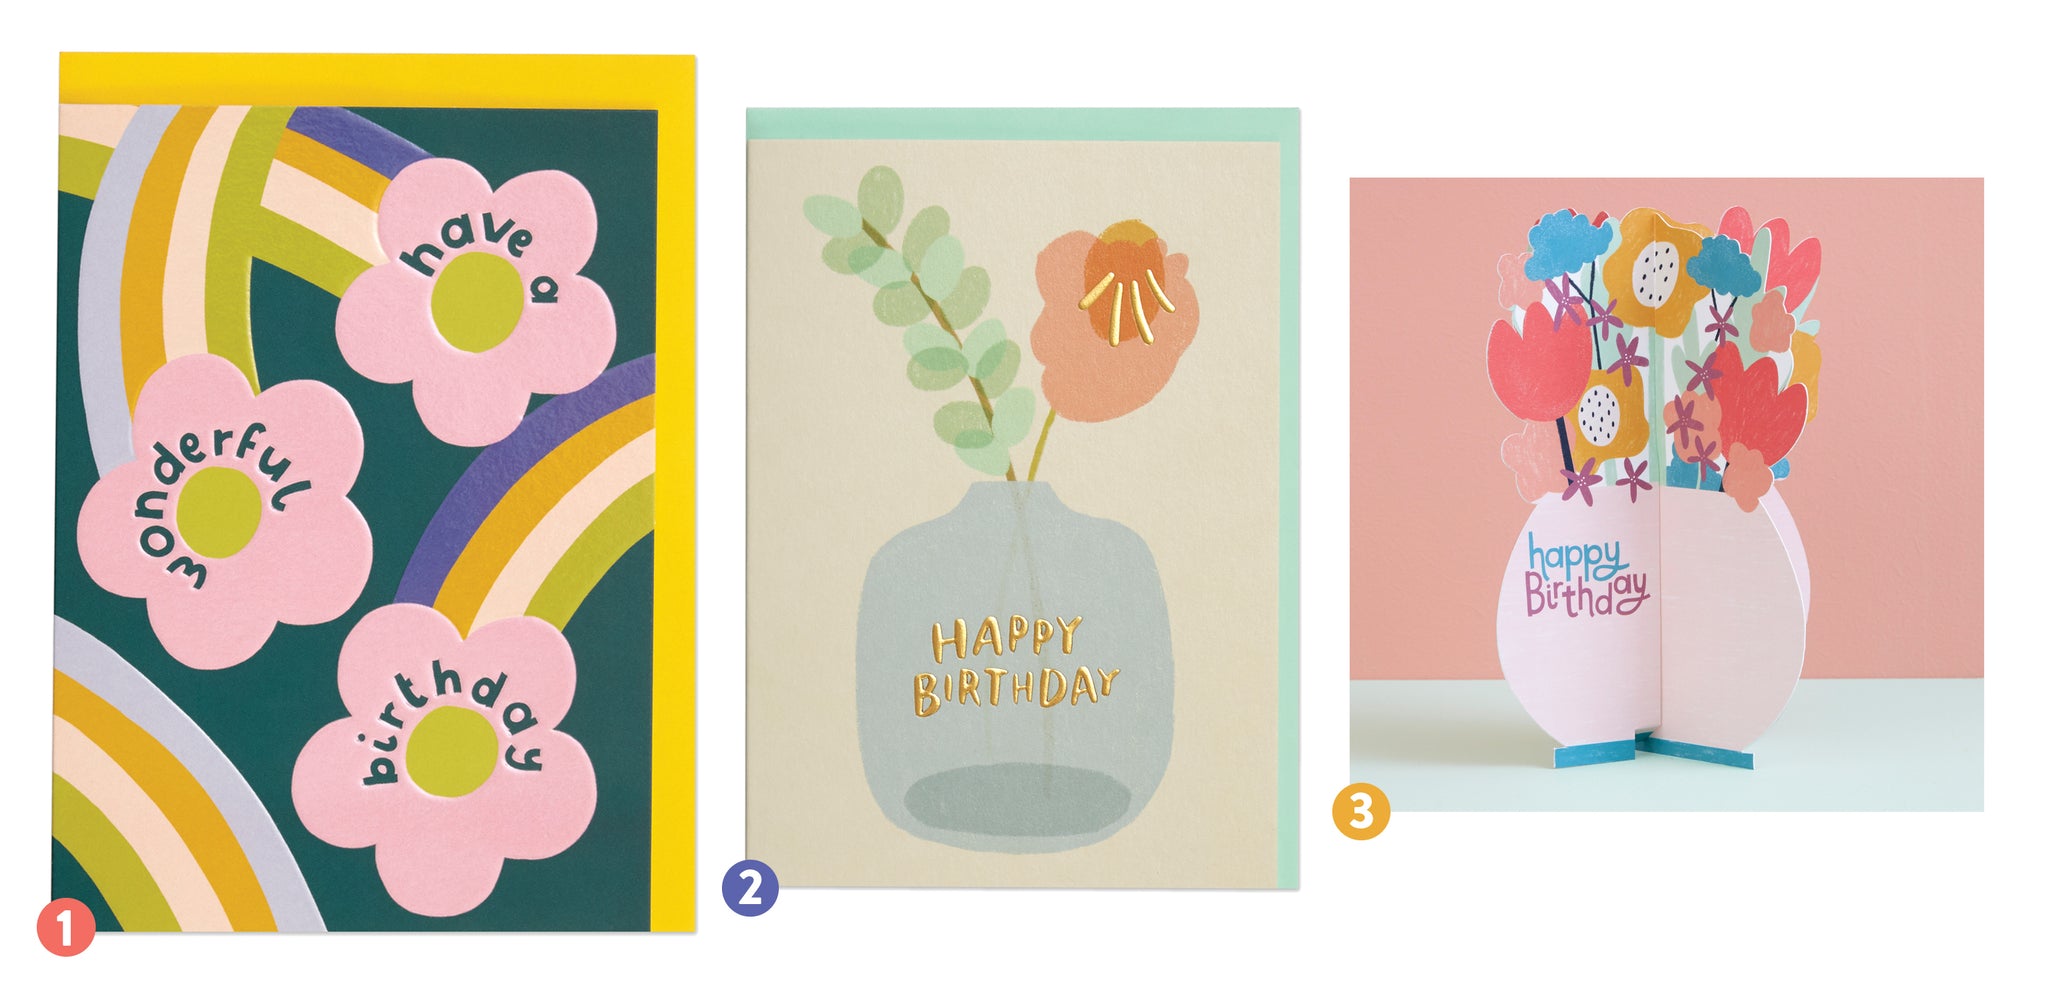 Floral Birthday cards by Raspberry Blossom